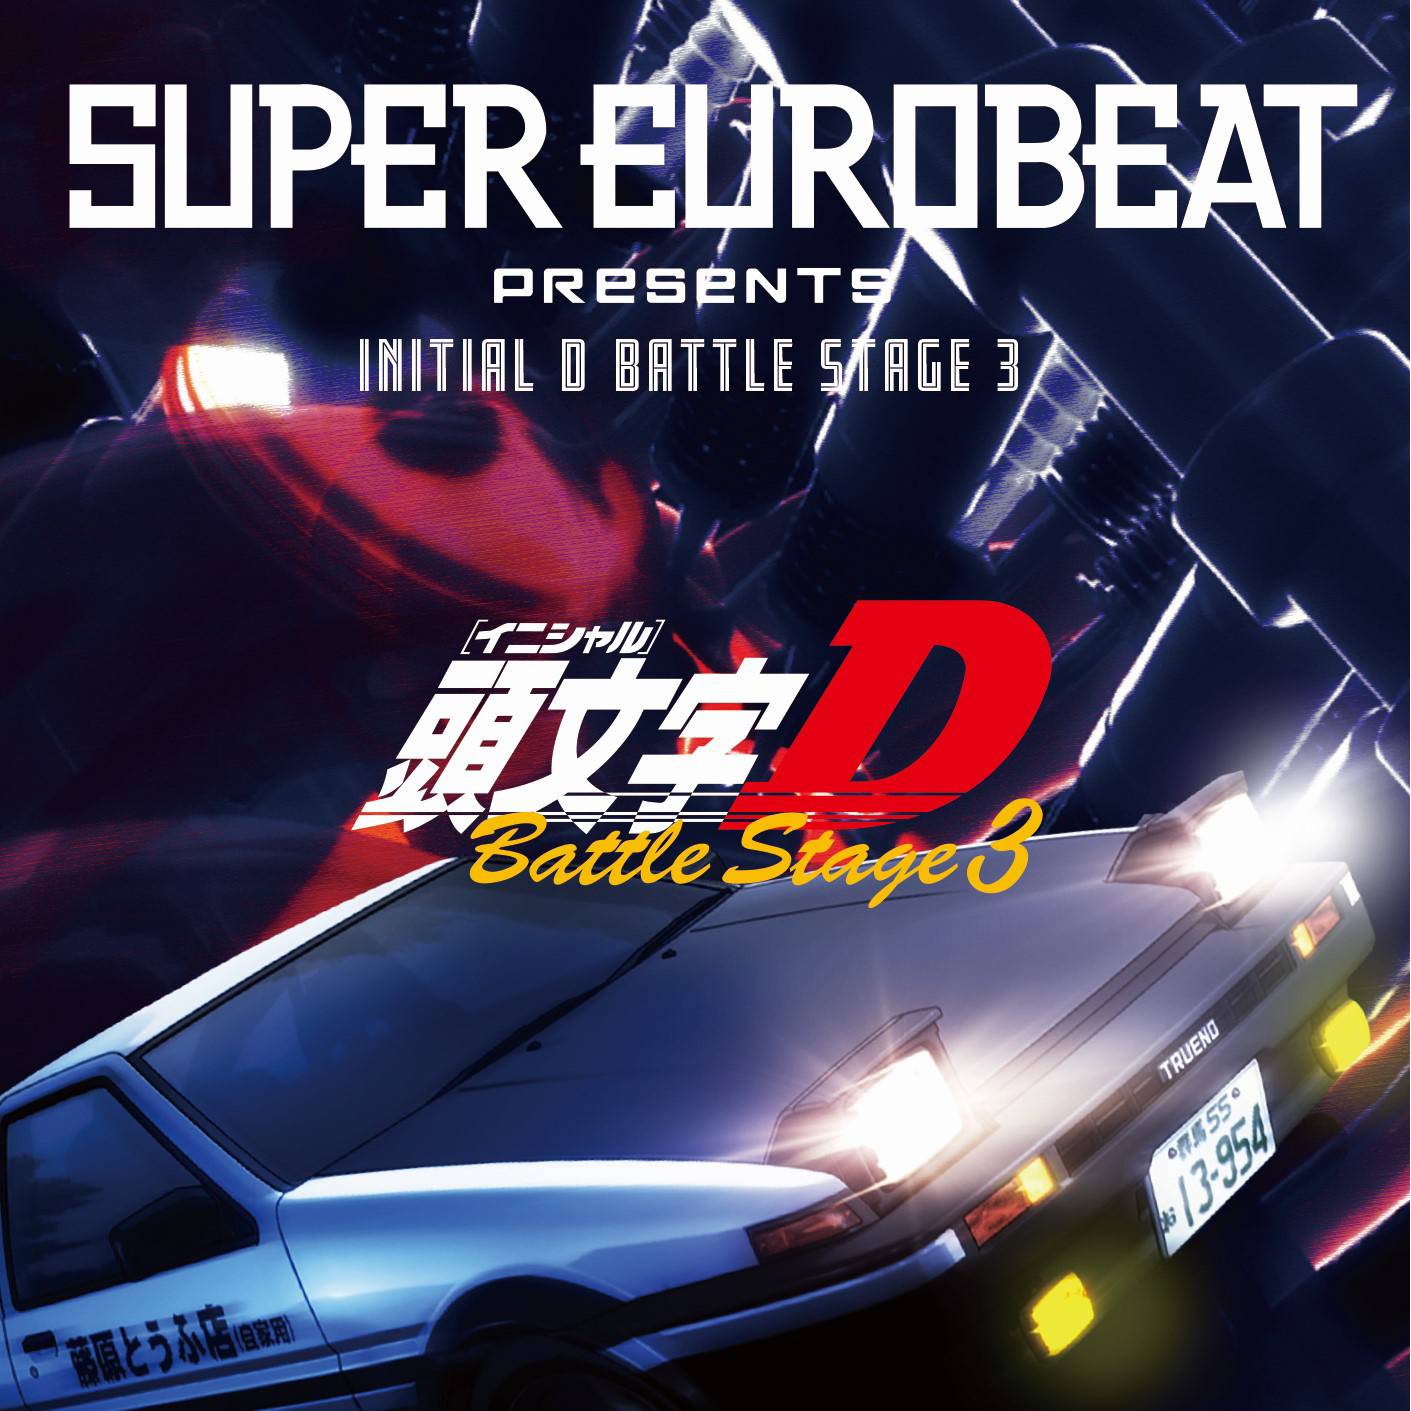 Super Eurobeat Presents Initial D Battle Stage 3 Eurobeat Wiki Fandom